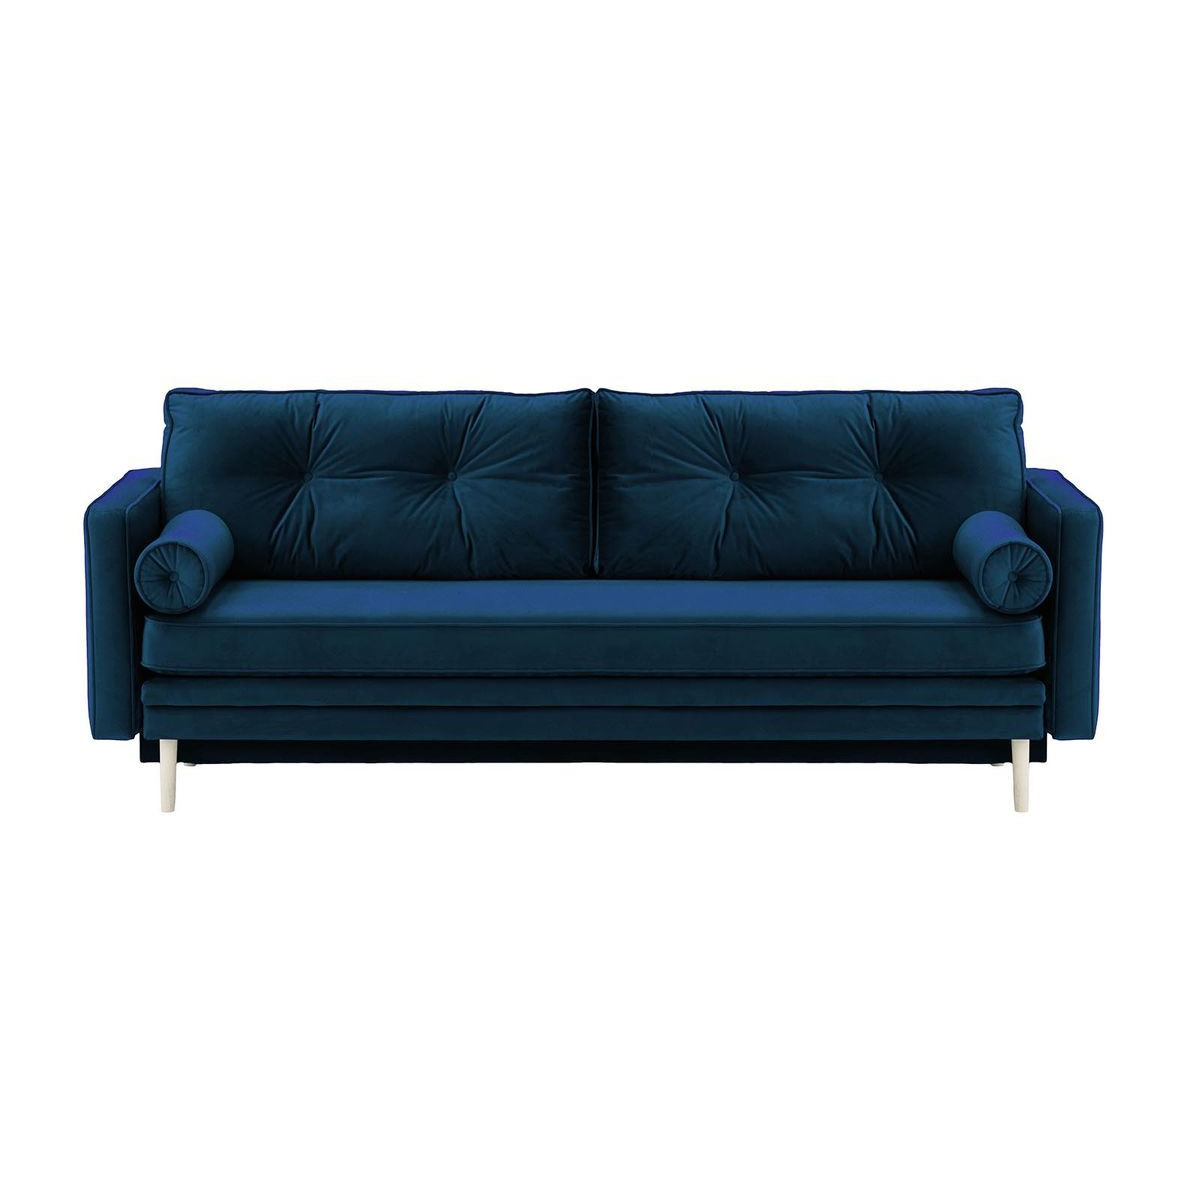 Mossa Sofa Bed with Storage, blue, Leg colour: white - image 1